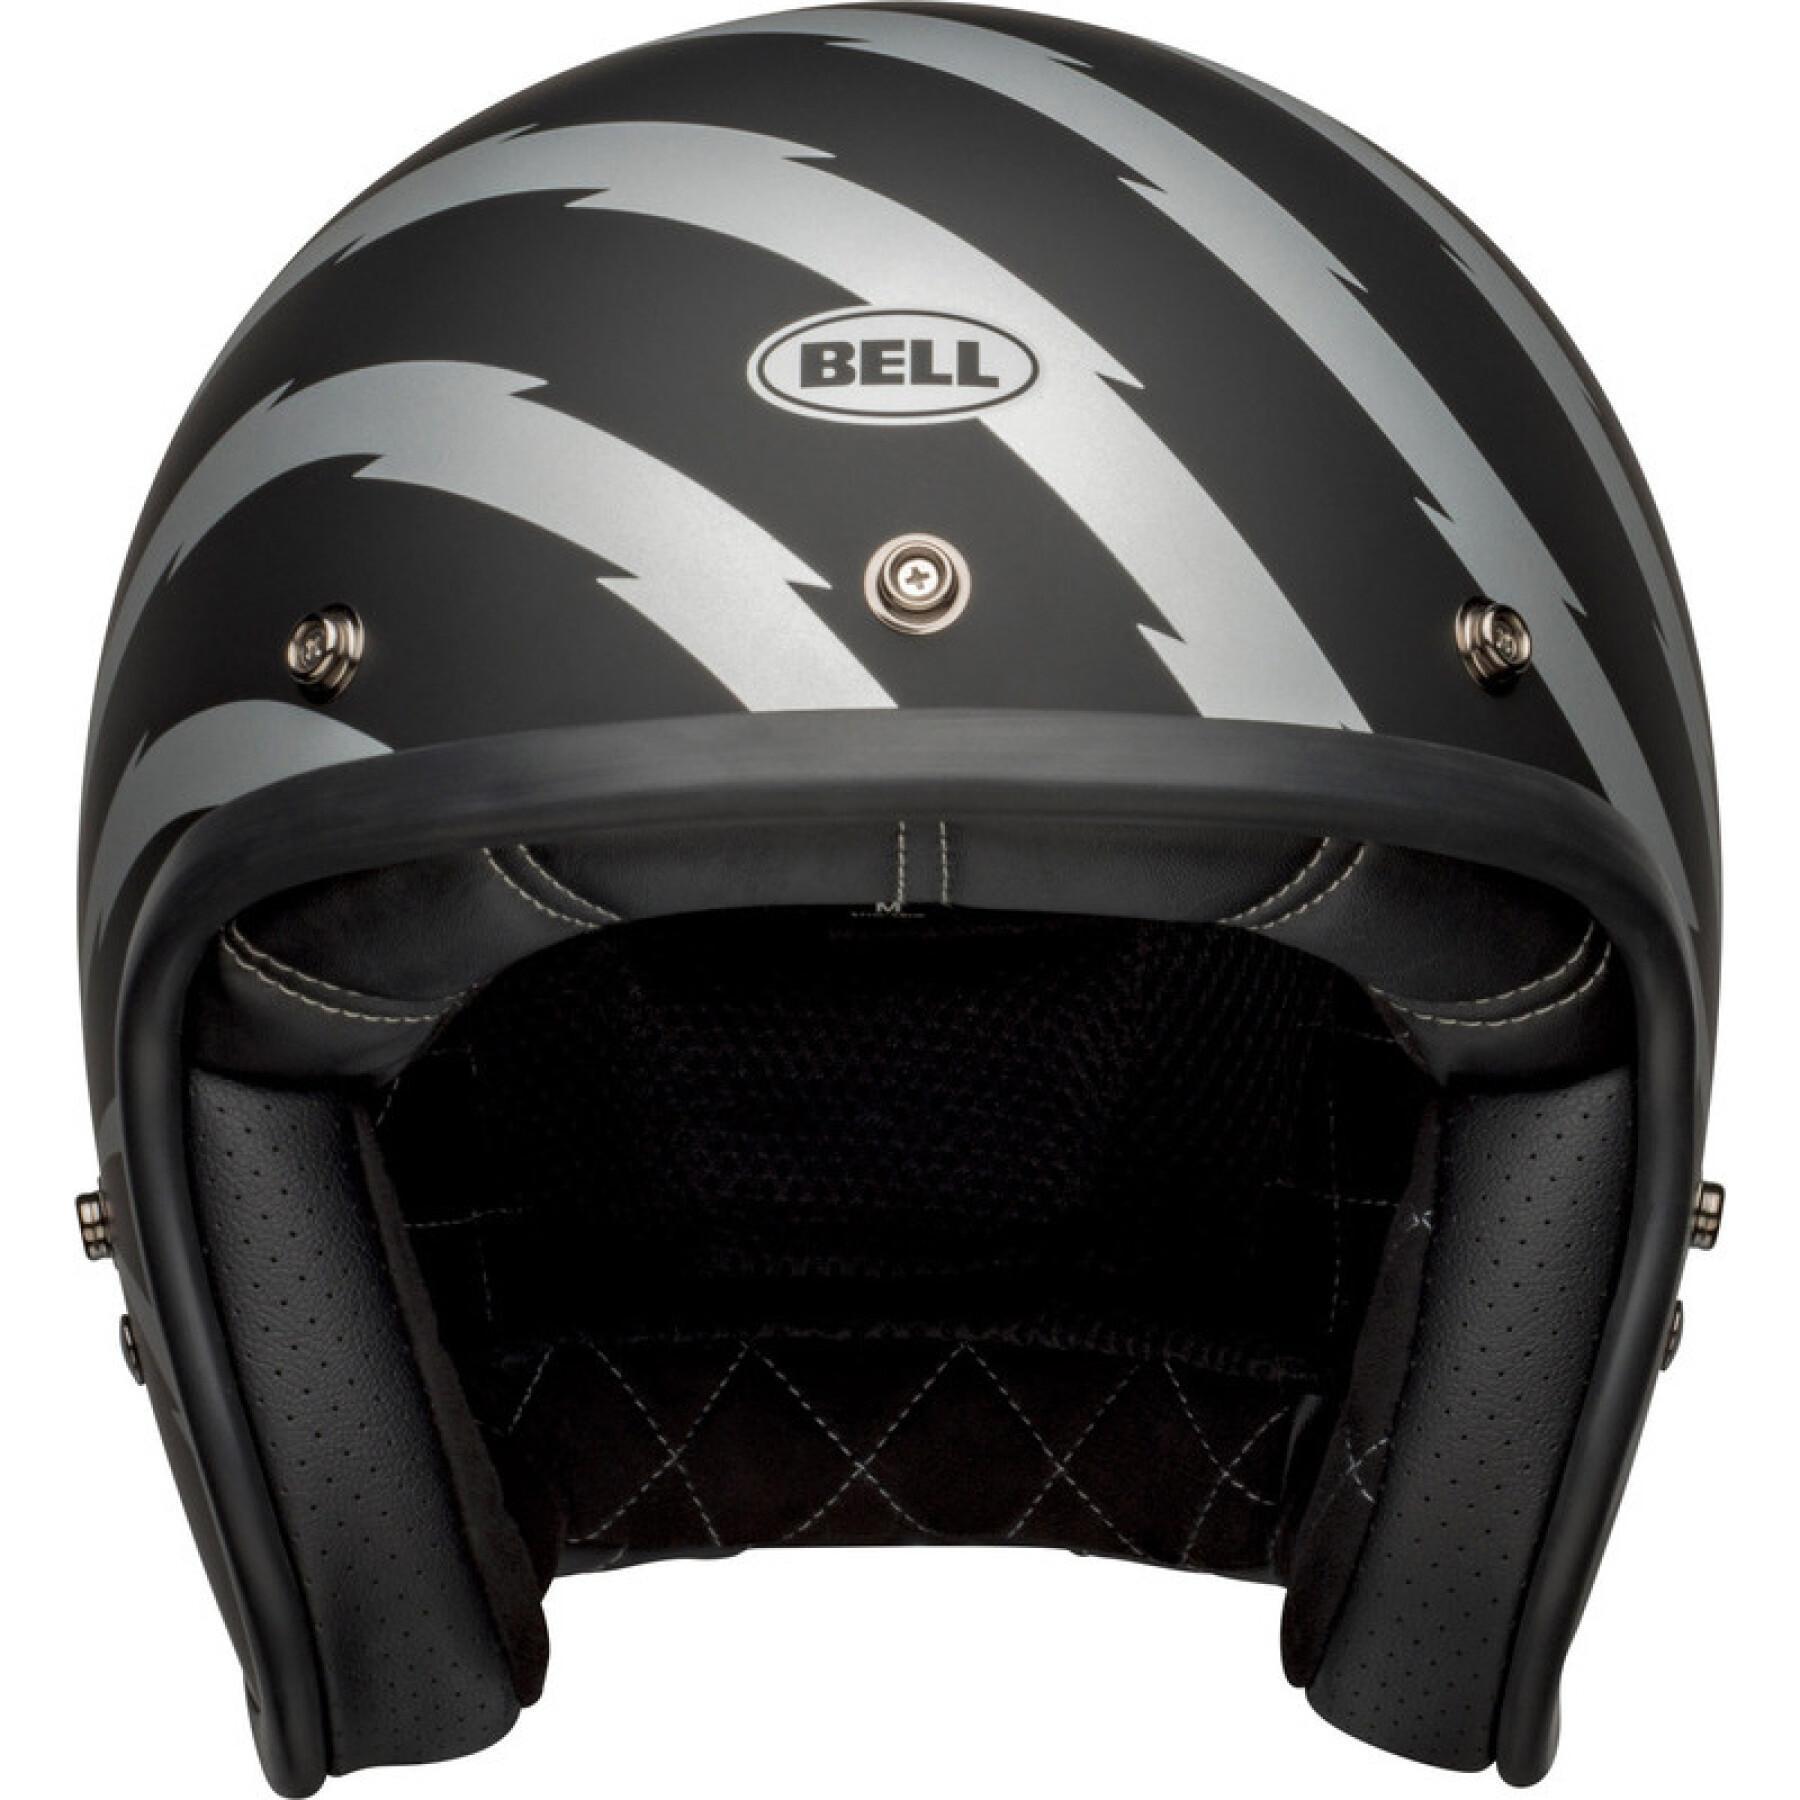 Jet motorcycle helmet Bell Custom 500 DLX SE Vertigo